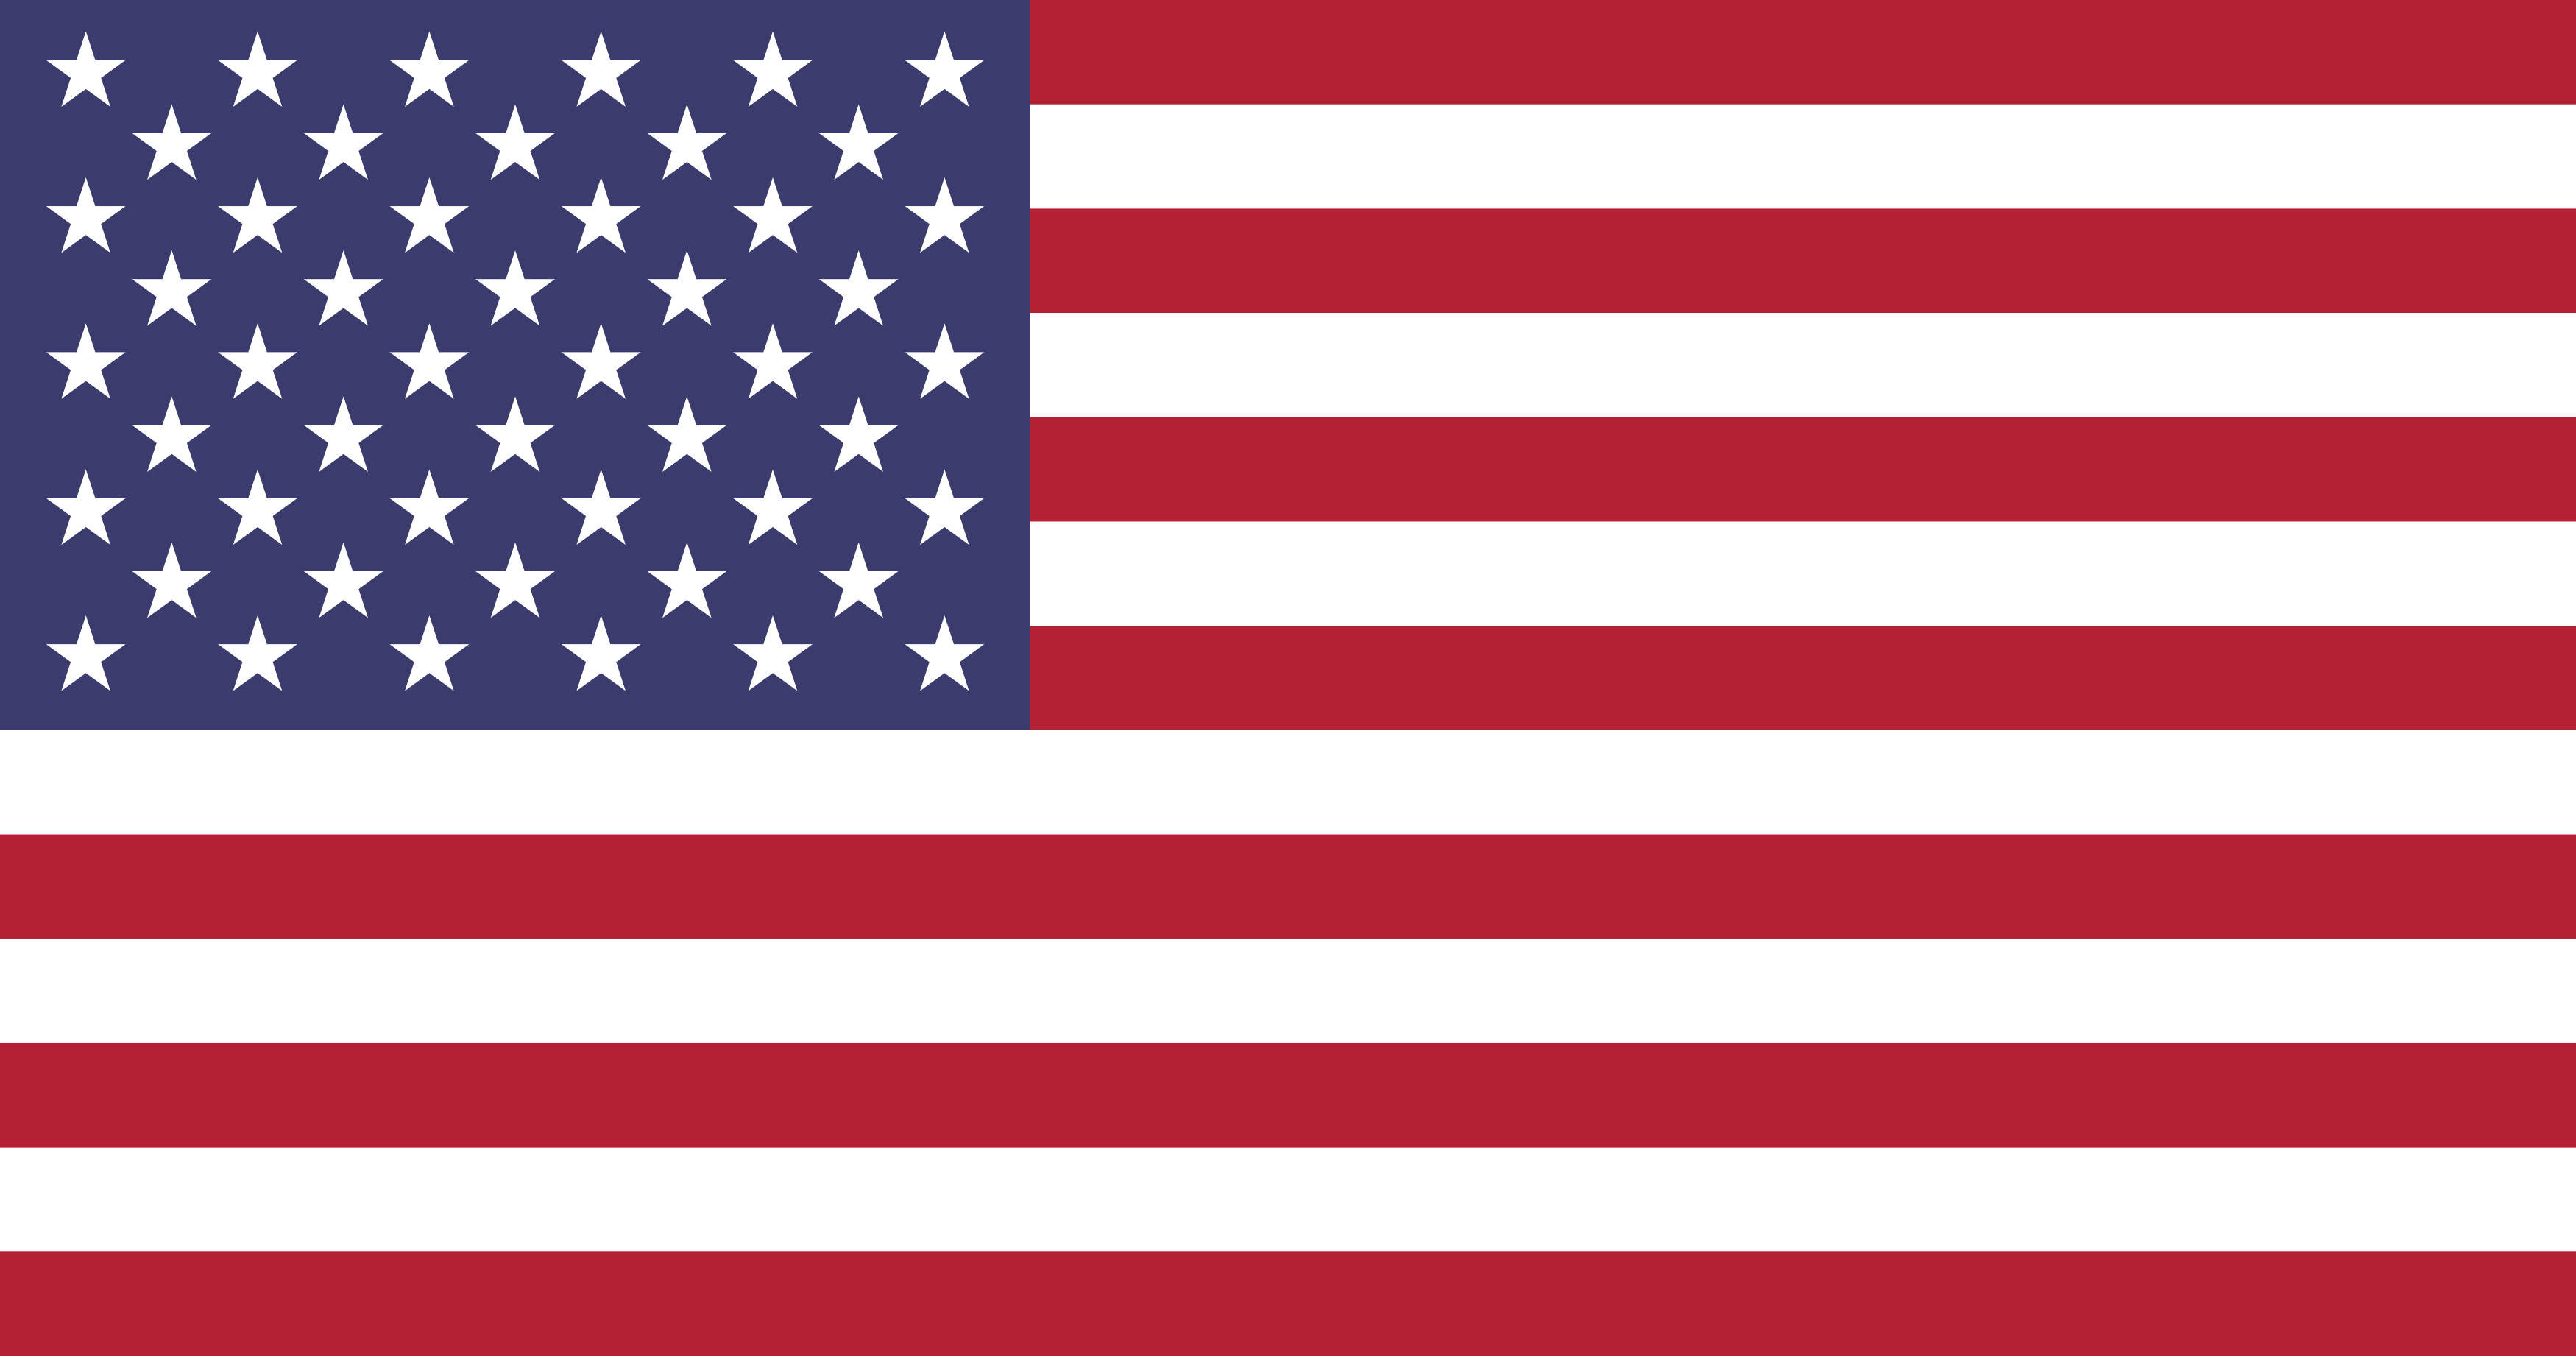 bandeira dos eua estados unidos da america - Bandeira dos Estados Unidos da América (EUA)